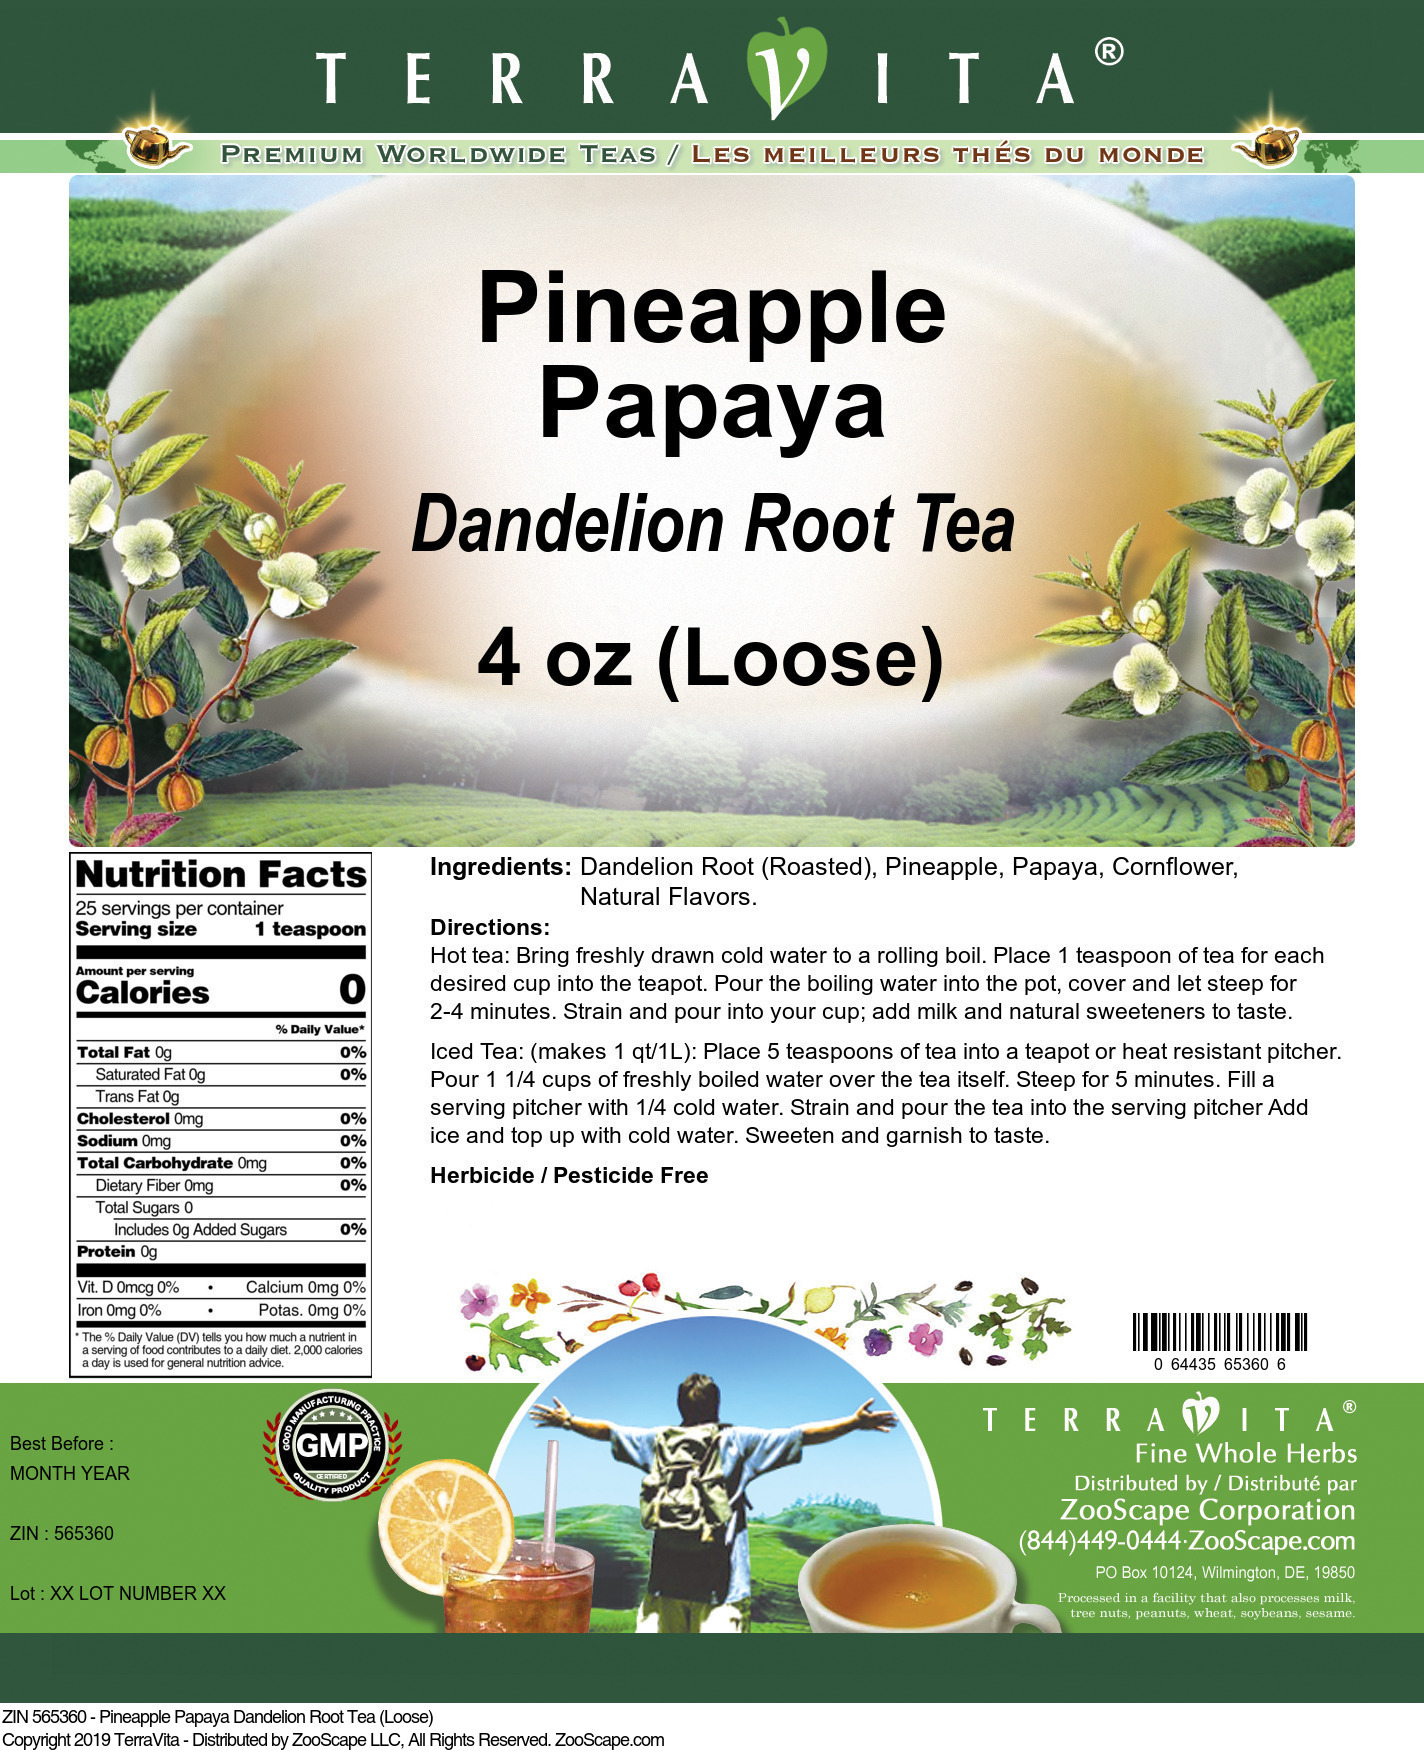 Pineapple Papaya Dandelion Root Tea (Loose) - Label